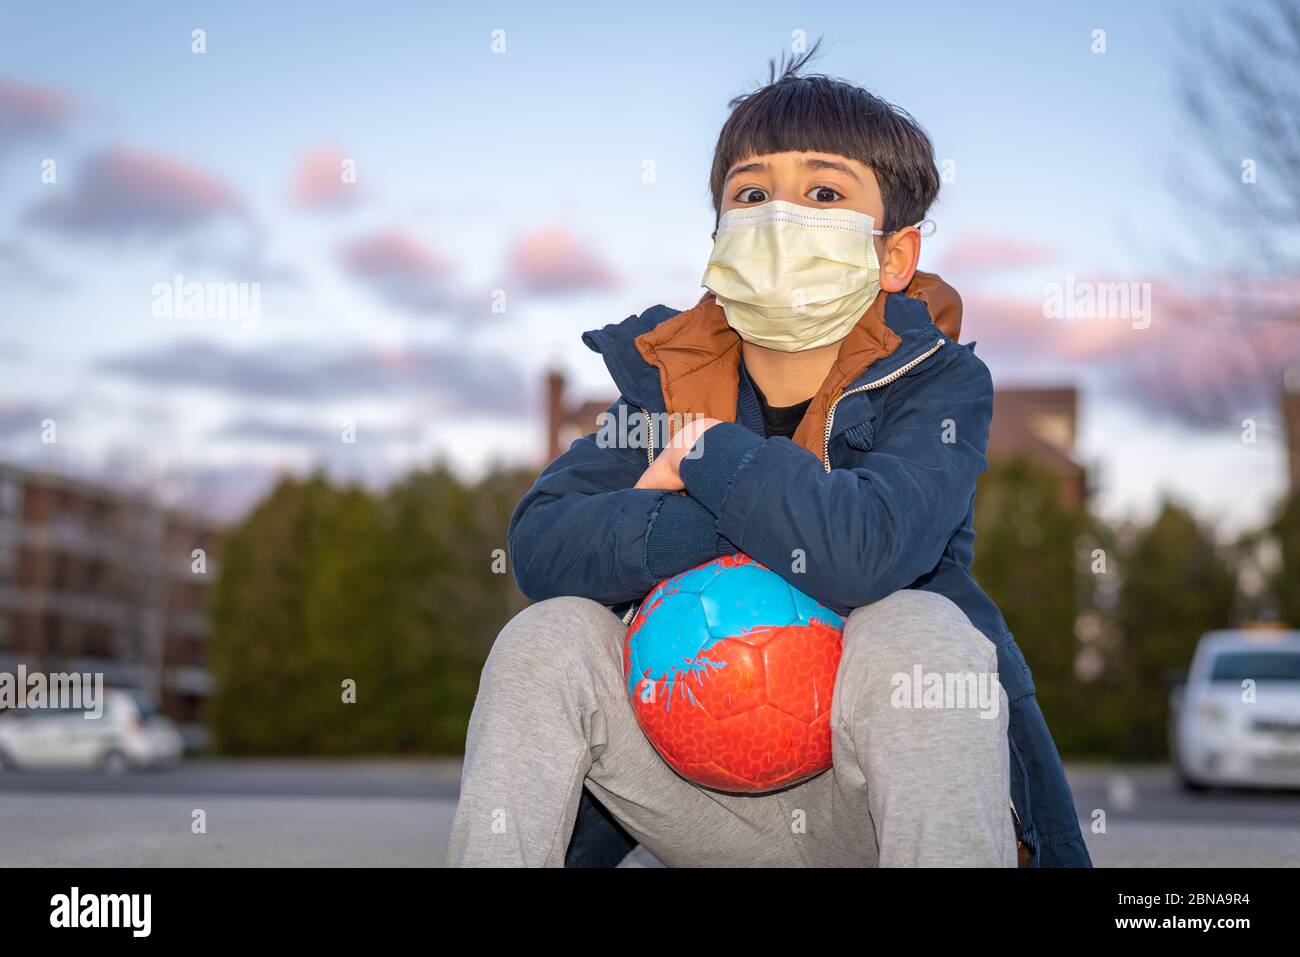 Kid playing with football wearing mask at backyard during novel coronavirus covid-19 outbreak and quarantine Stock Photo